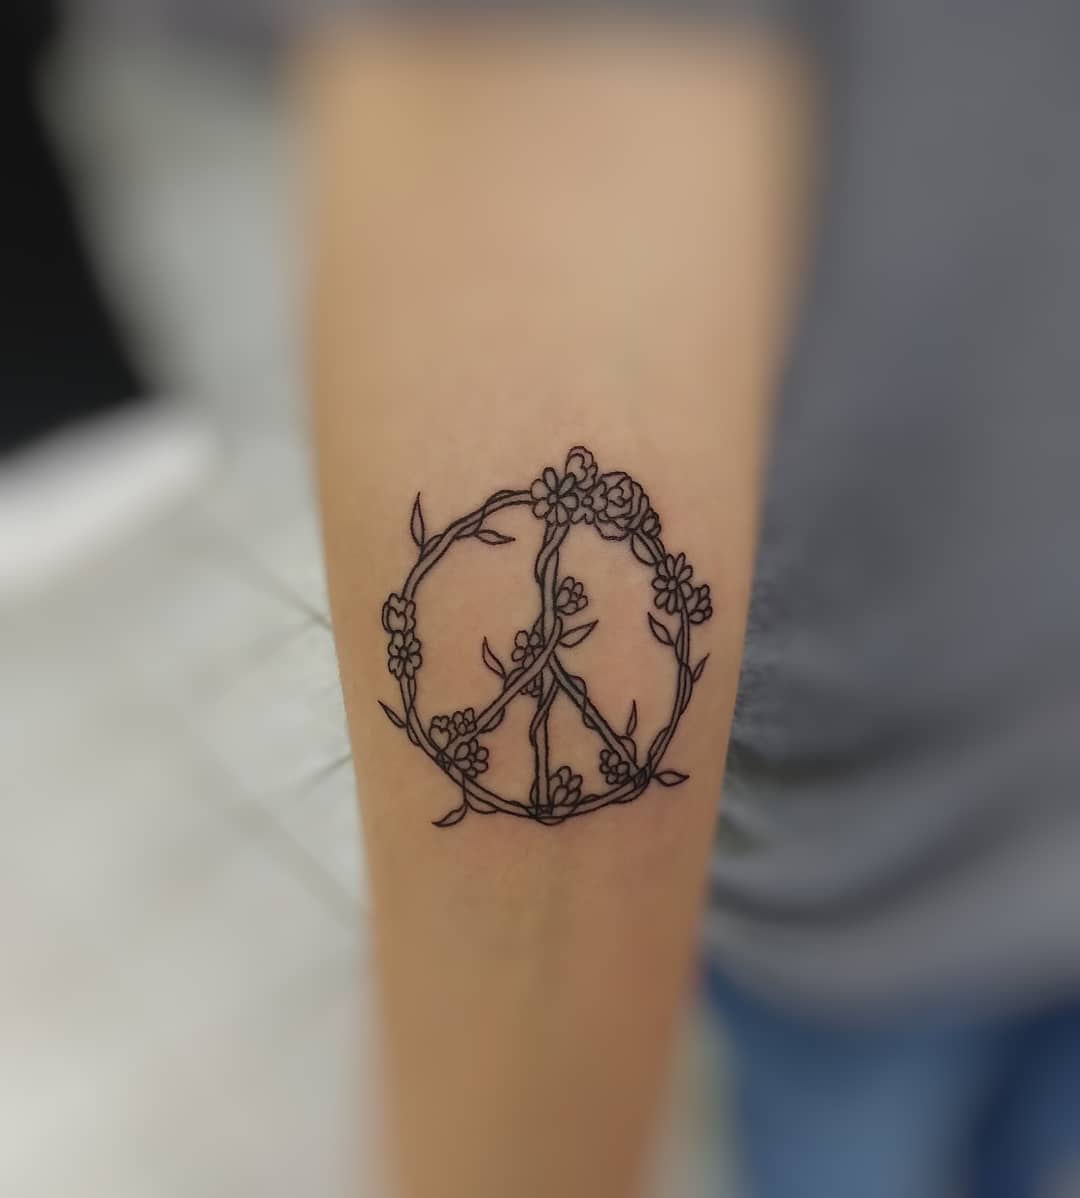 Tatuaggio simbolo pace by @cassinii